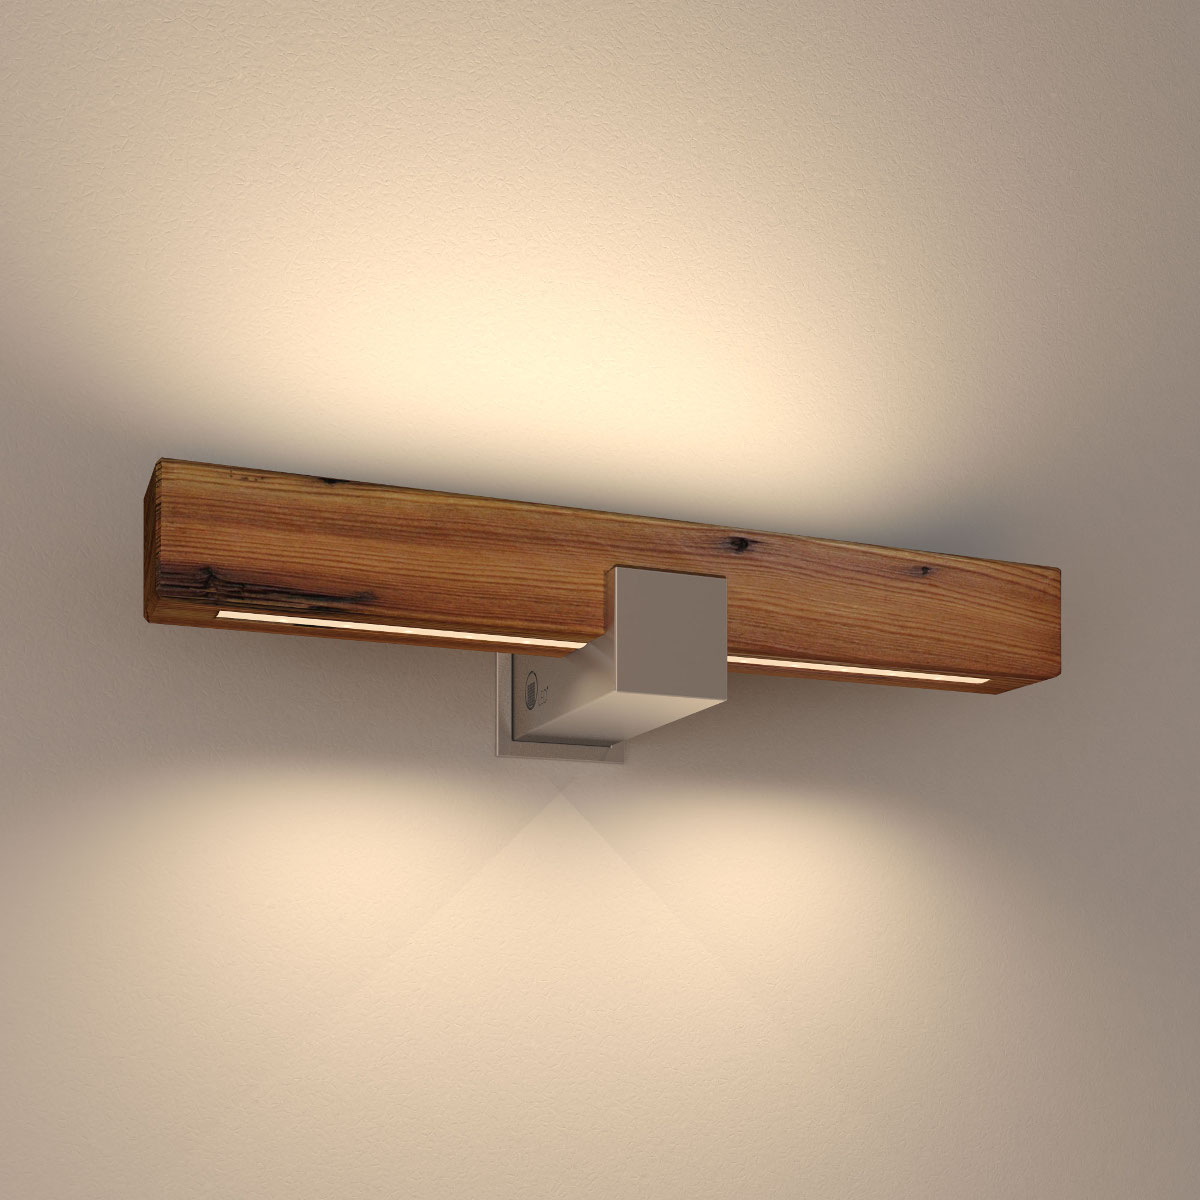 Up-Down-LED-Wandleuchte aus Massivholz, 40 cm: 40 cm breite Wandleuchte aus Massivholz, in Südtirol aus antiken Balken gefertigt (hier Lärche antik)